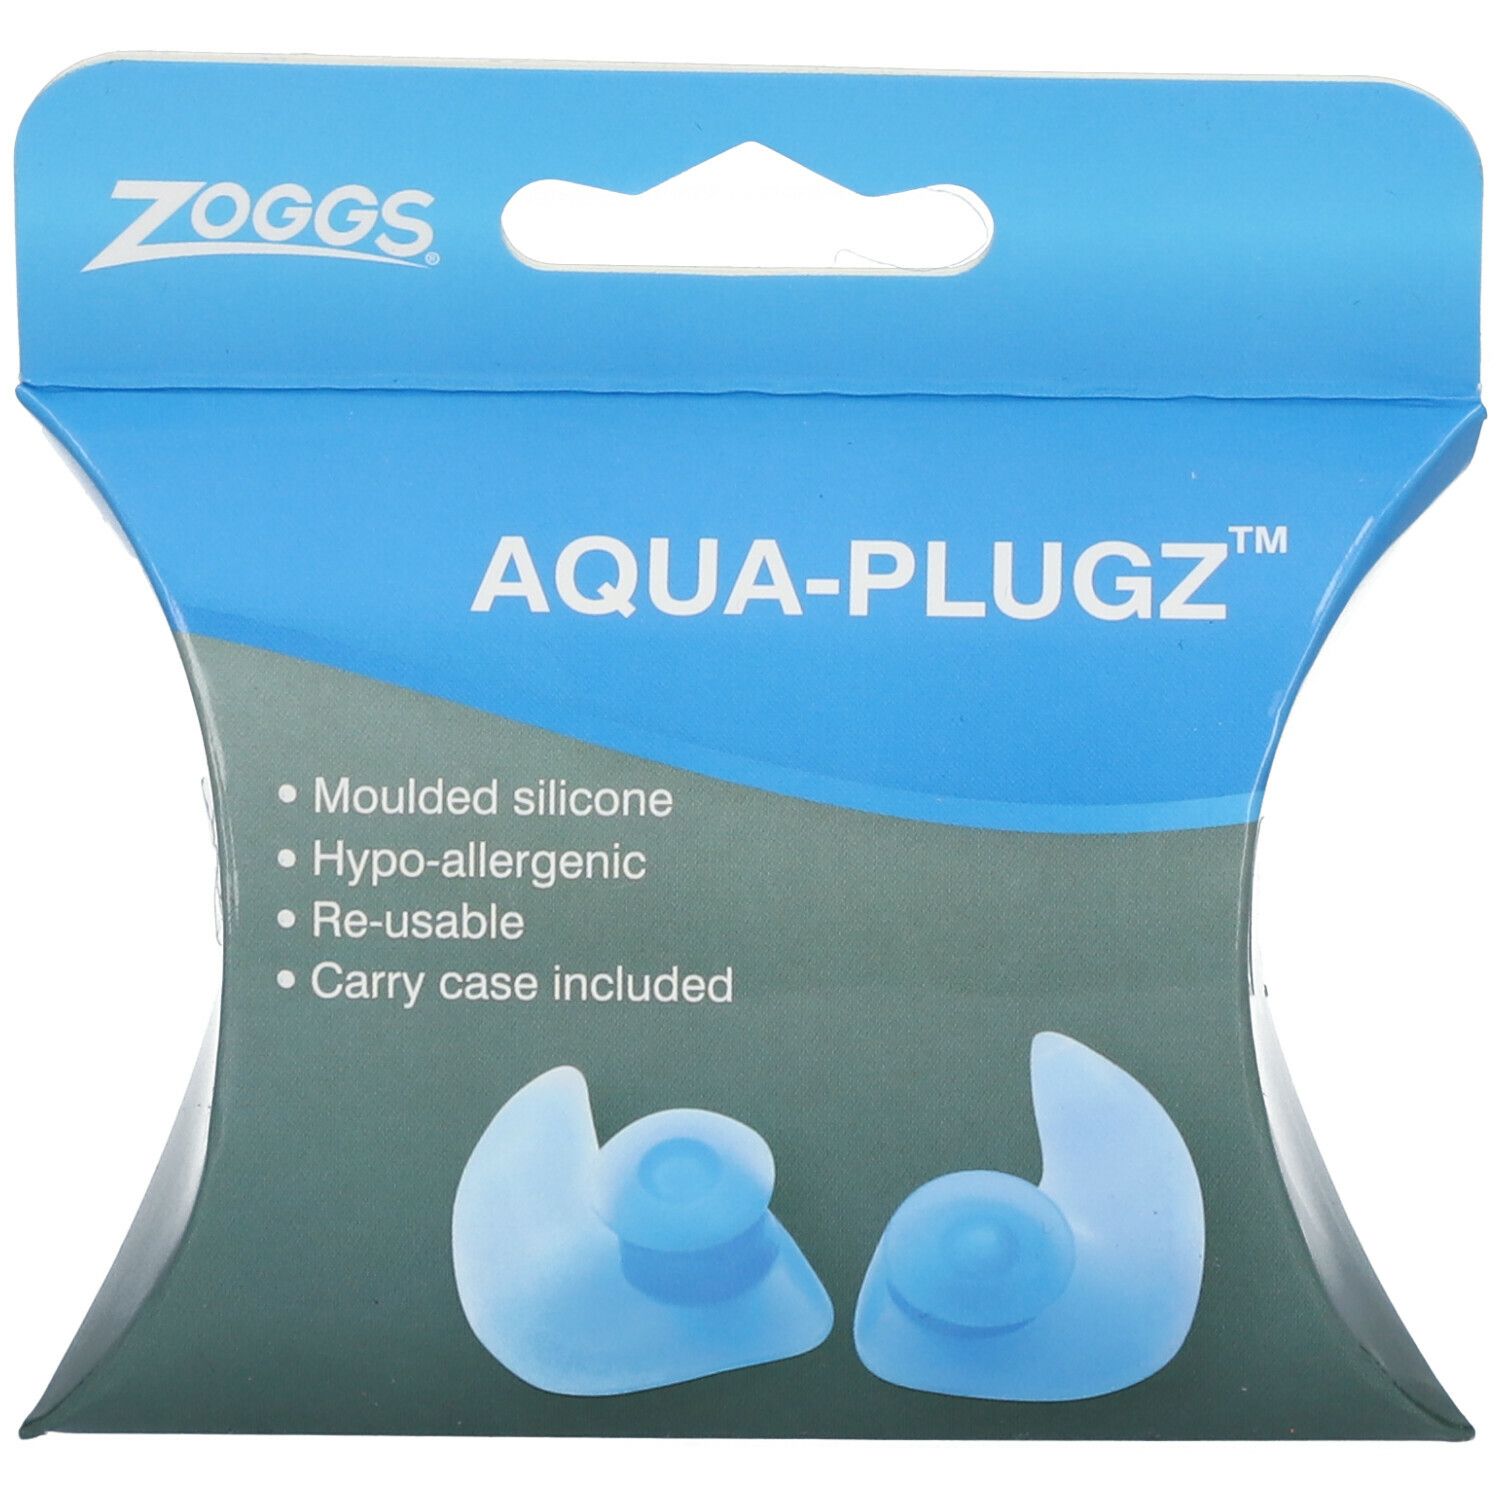 Zoggs aqua plugz adults